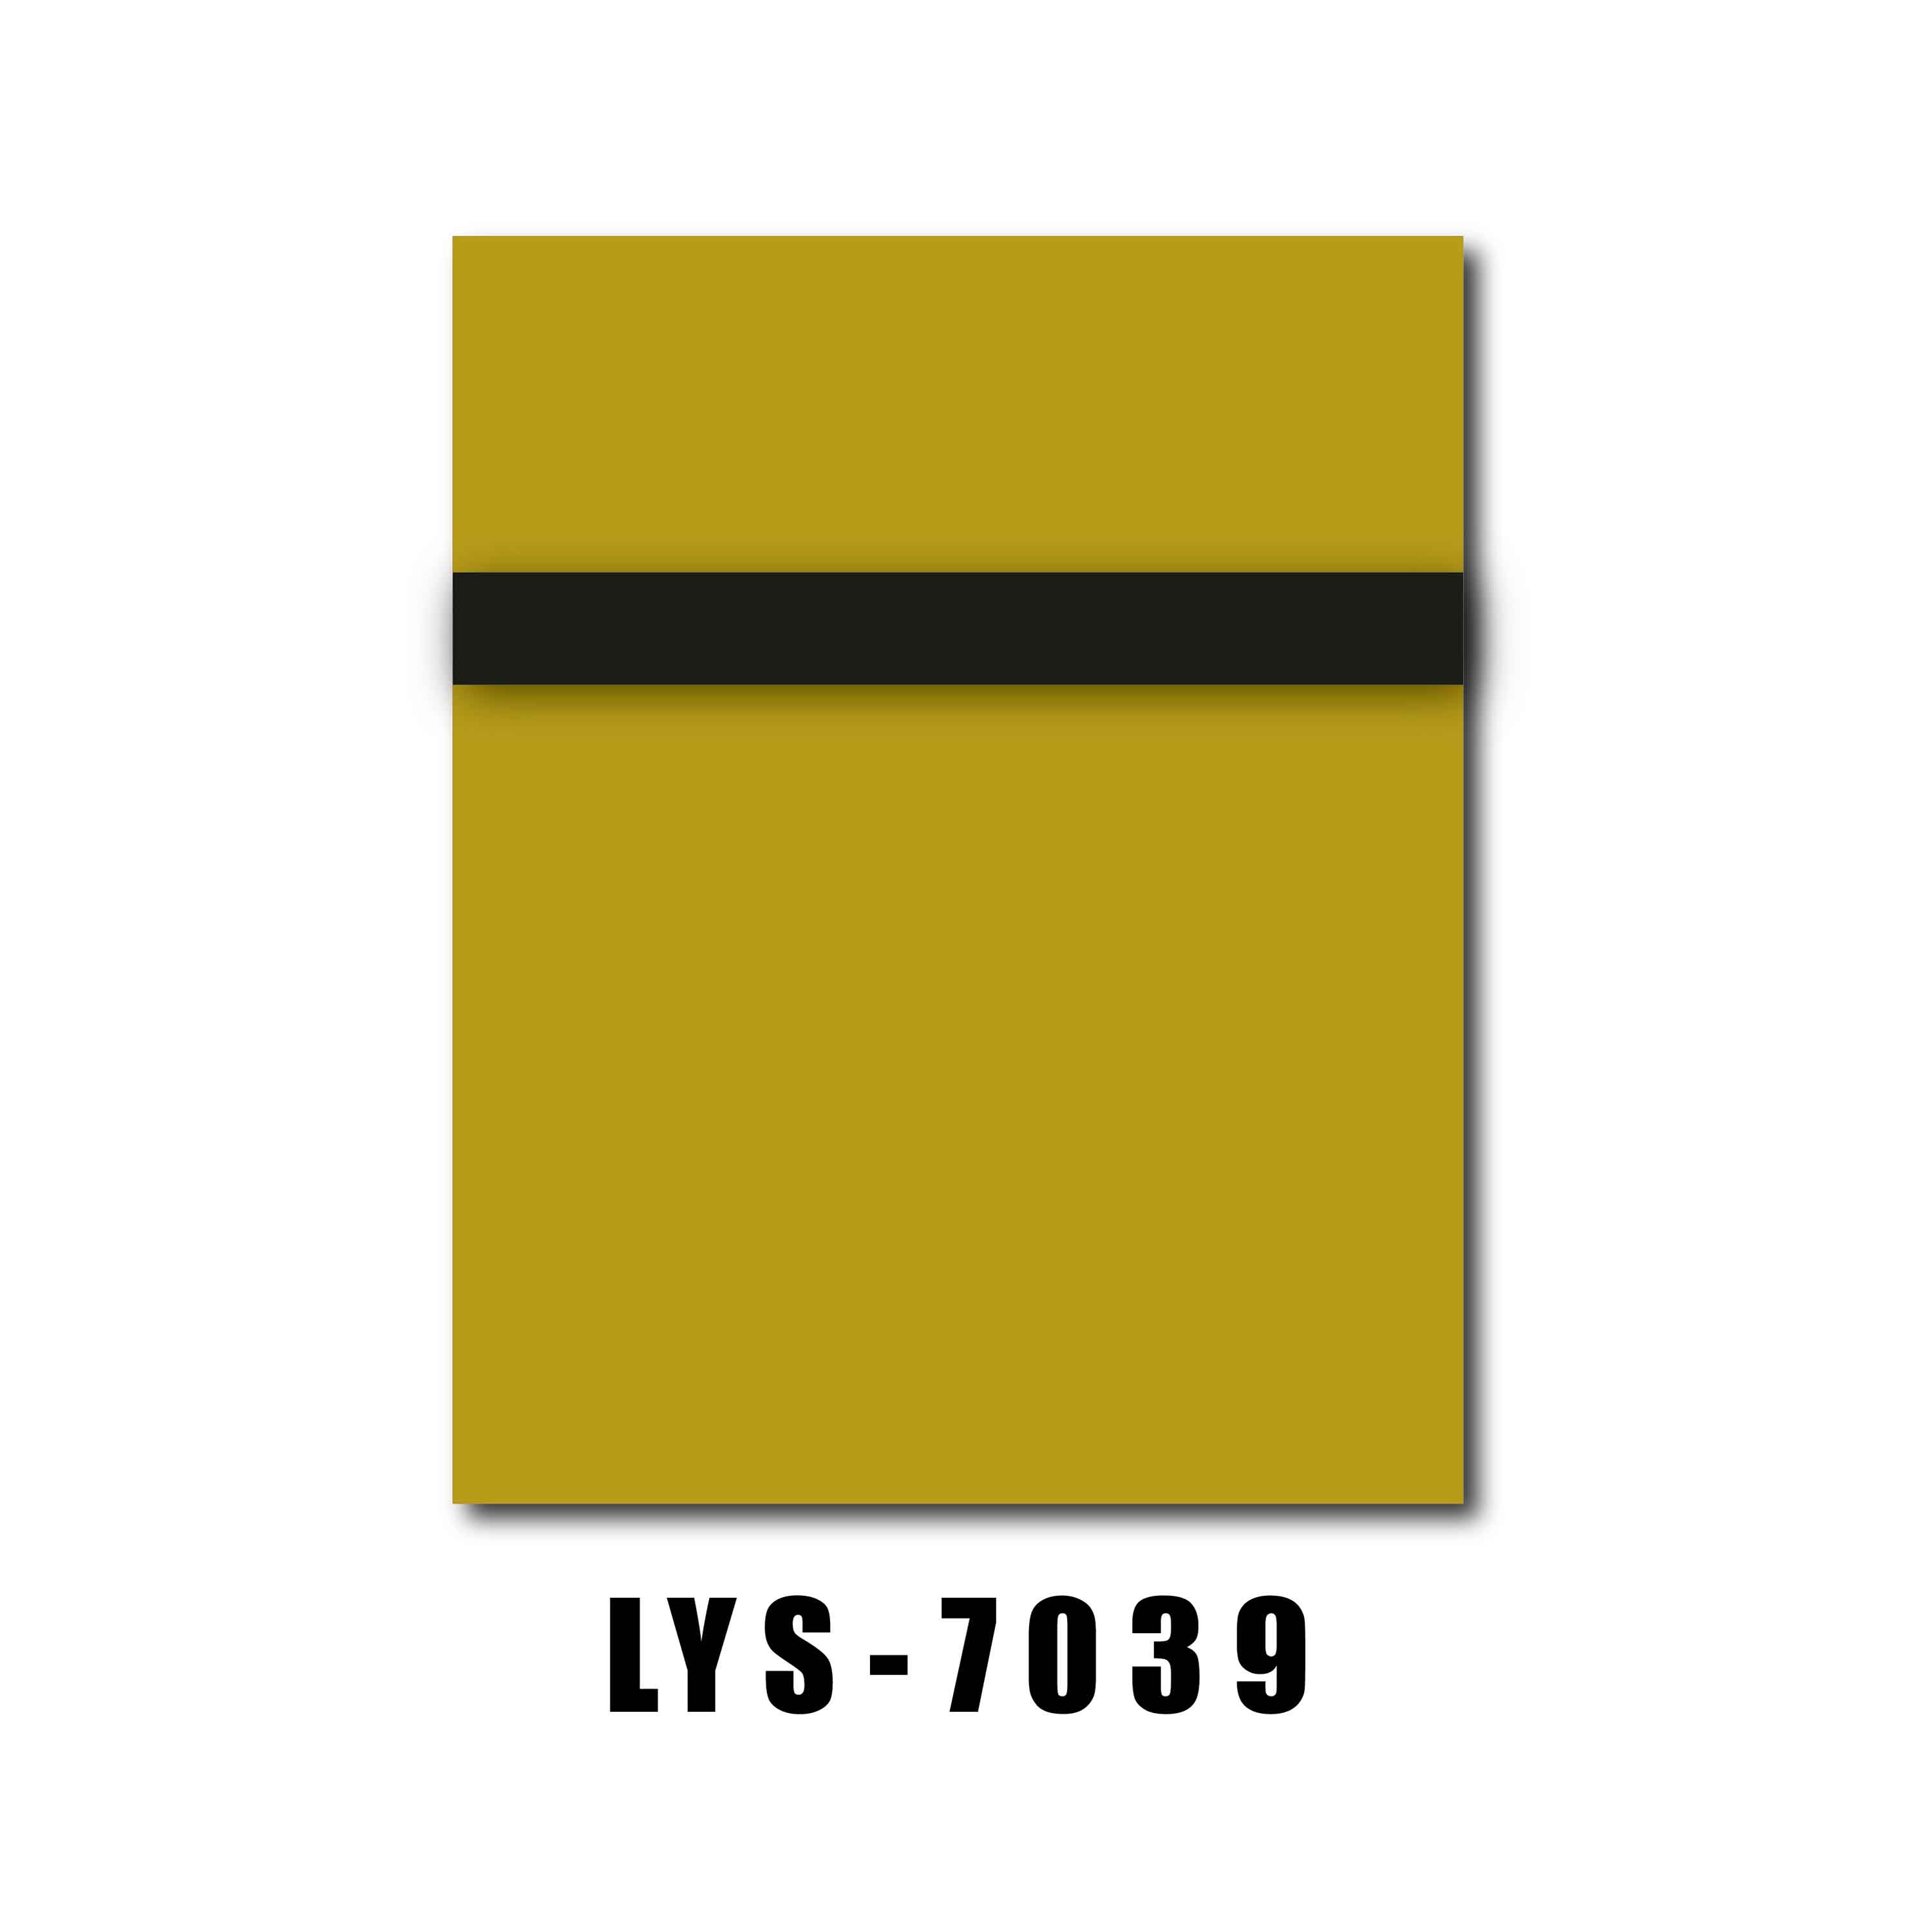 UV Resistant Yellow ABS Plastic Sheet 4x8